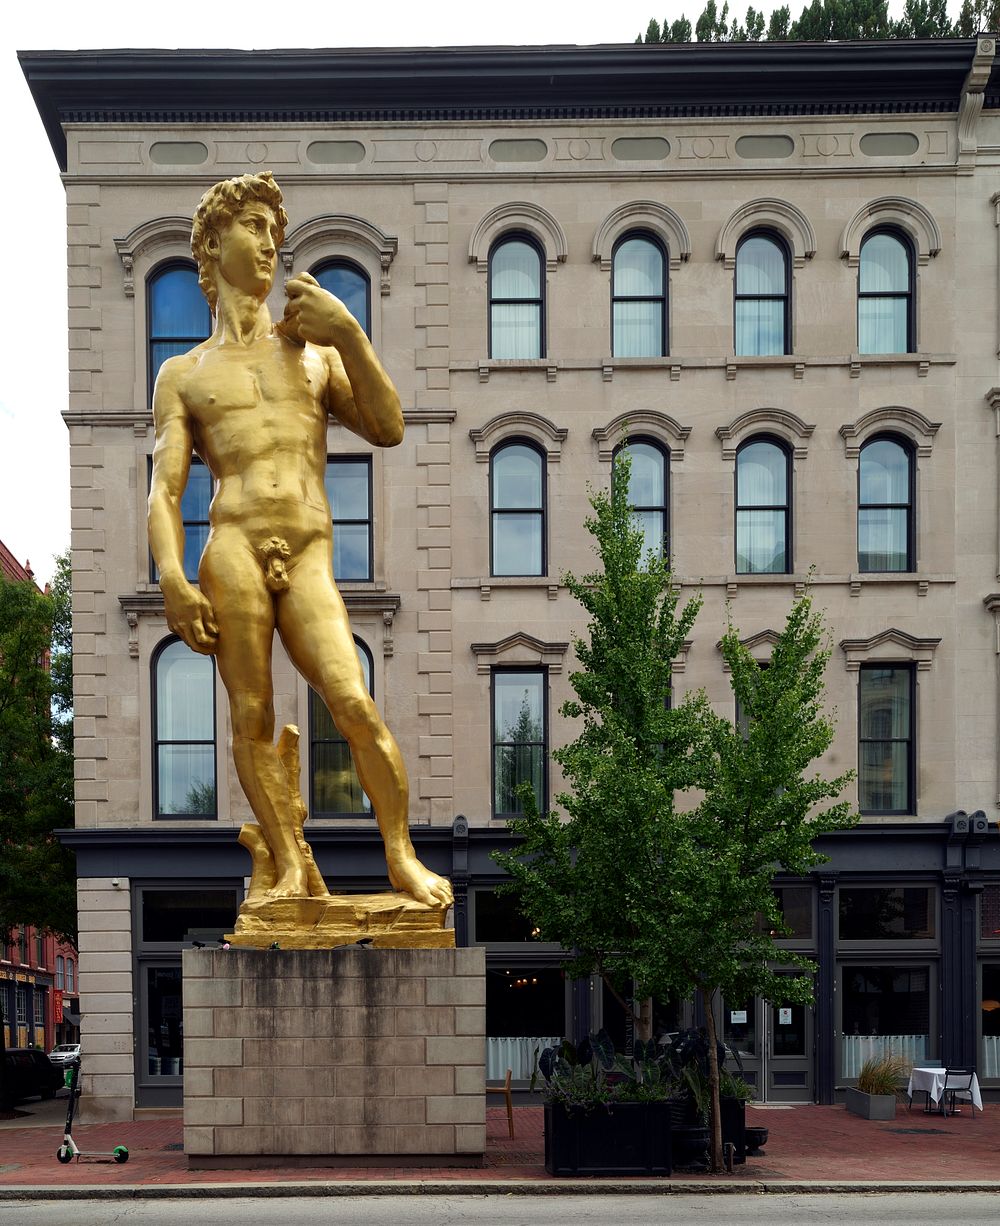                         An oversized, ornamental Statue of David outside the 21c Musem & Hotel in Louisville, Kentucky's…